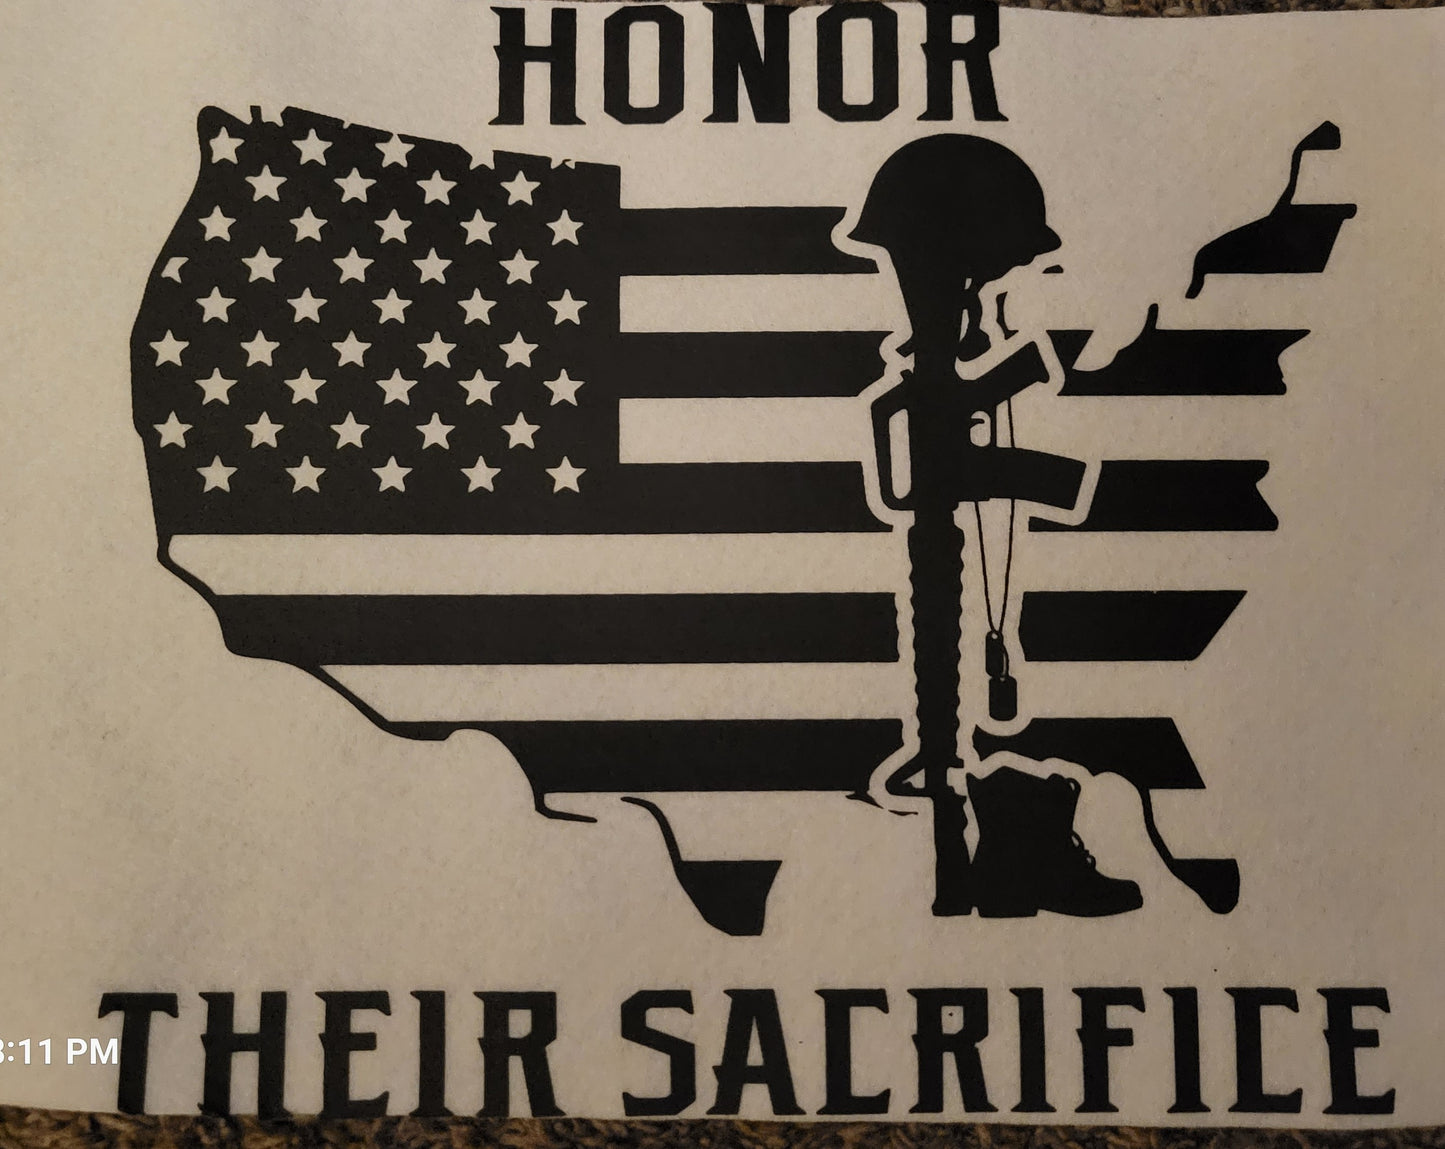 Honor their sacrifice